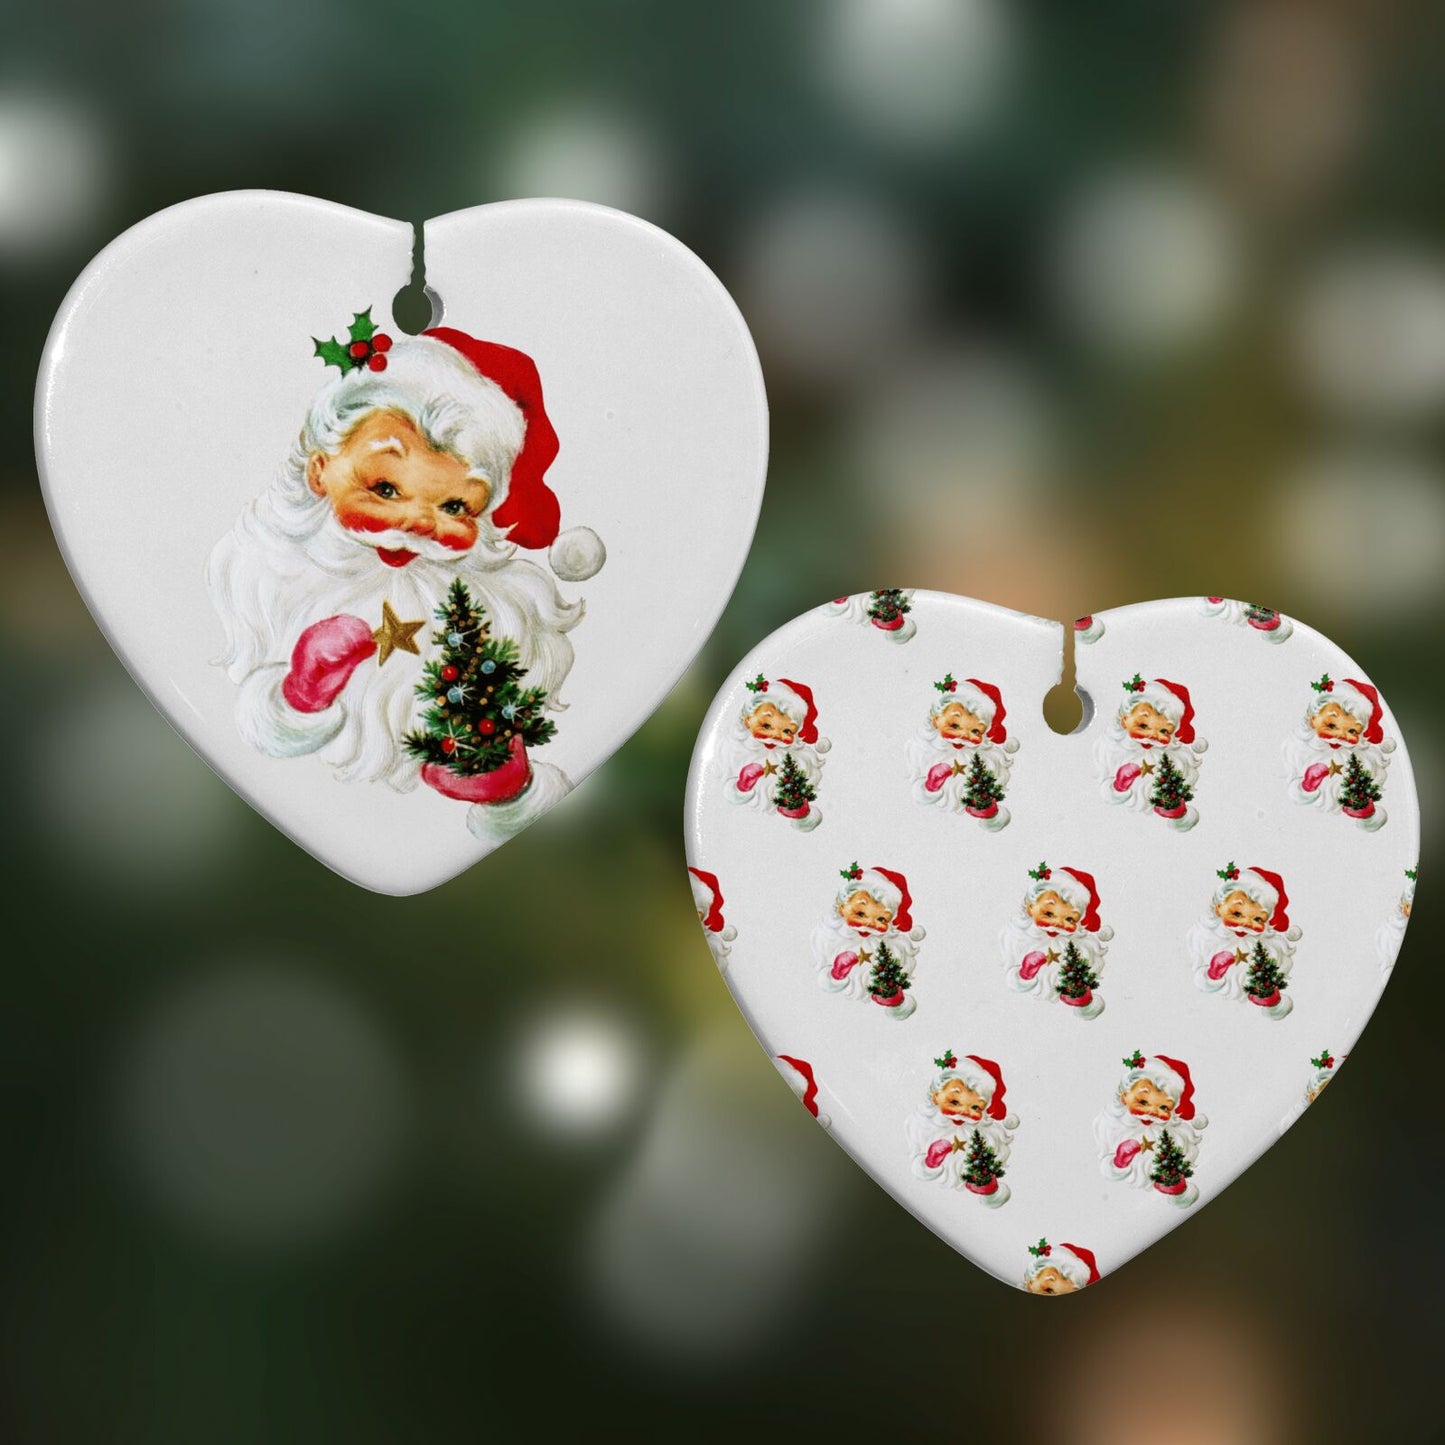 Retro Santa Face Heart Decoration on Christmas Background